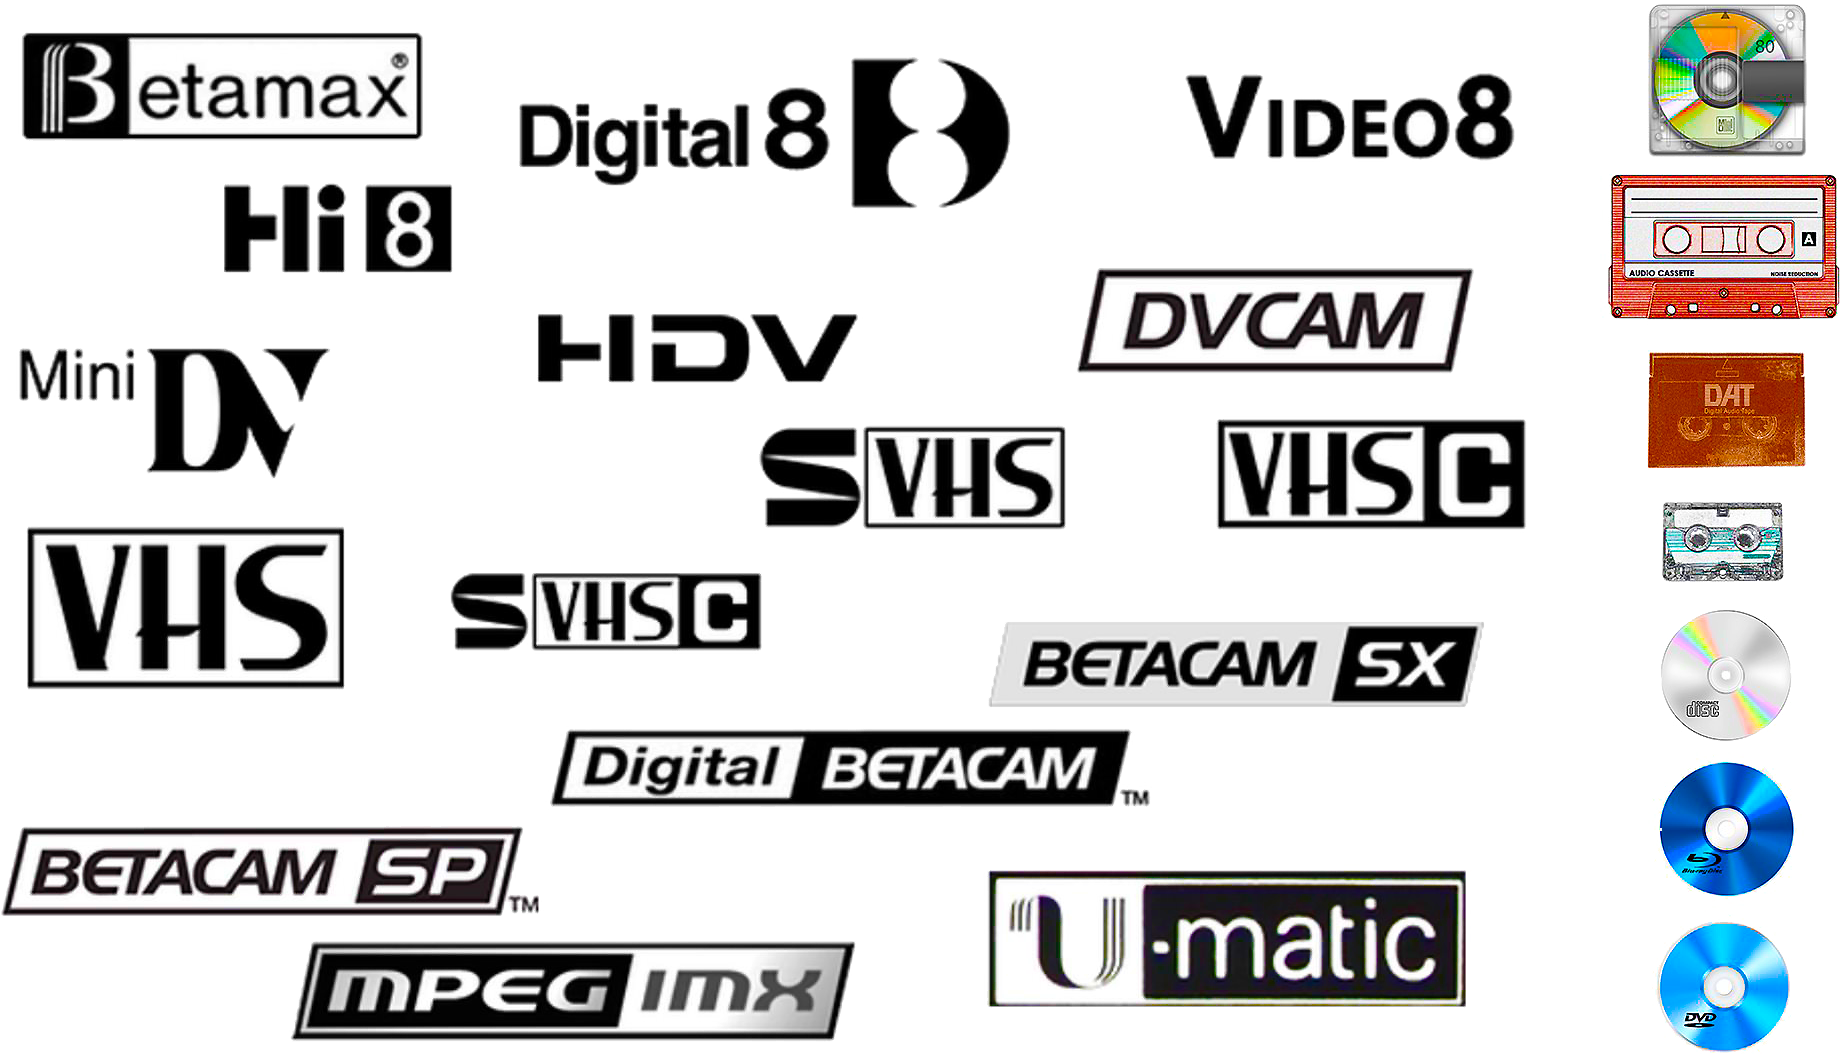 Riversamenti video VHS, VHS-C, S-VHS, Video2000, Betamax, U-matic 3/4, U-matic BVU, Video8, Hi8, mini DV, DVCAM, Betacam SP, Digital Betacam, Betacam SX, DVCpro HD, Hdv, Digital 8